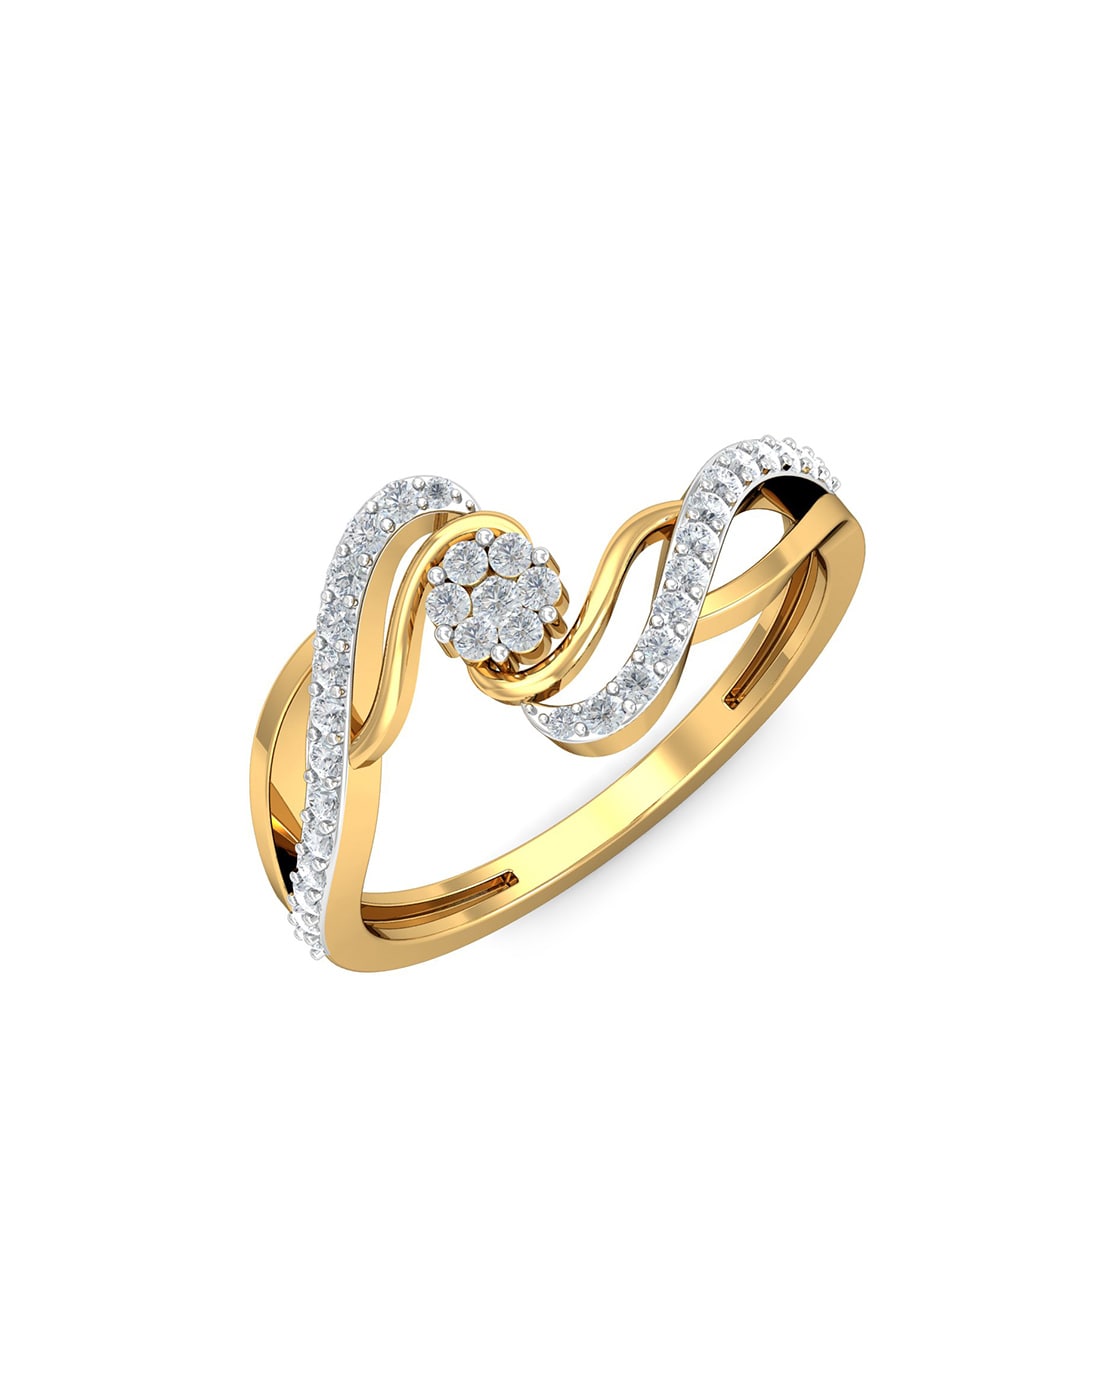 Ring gold design 2022-Best ring gold design 2022-2023 - YouTube